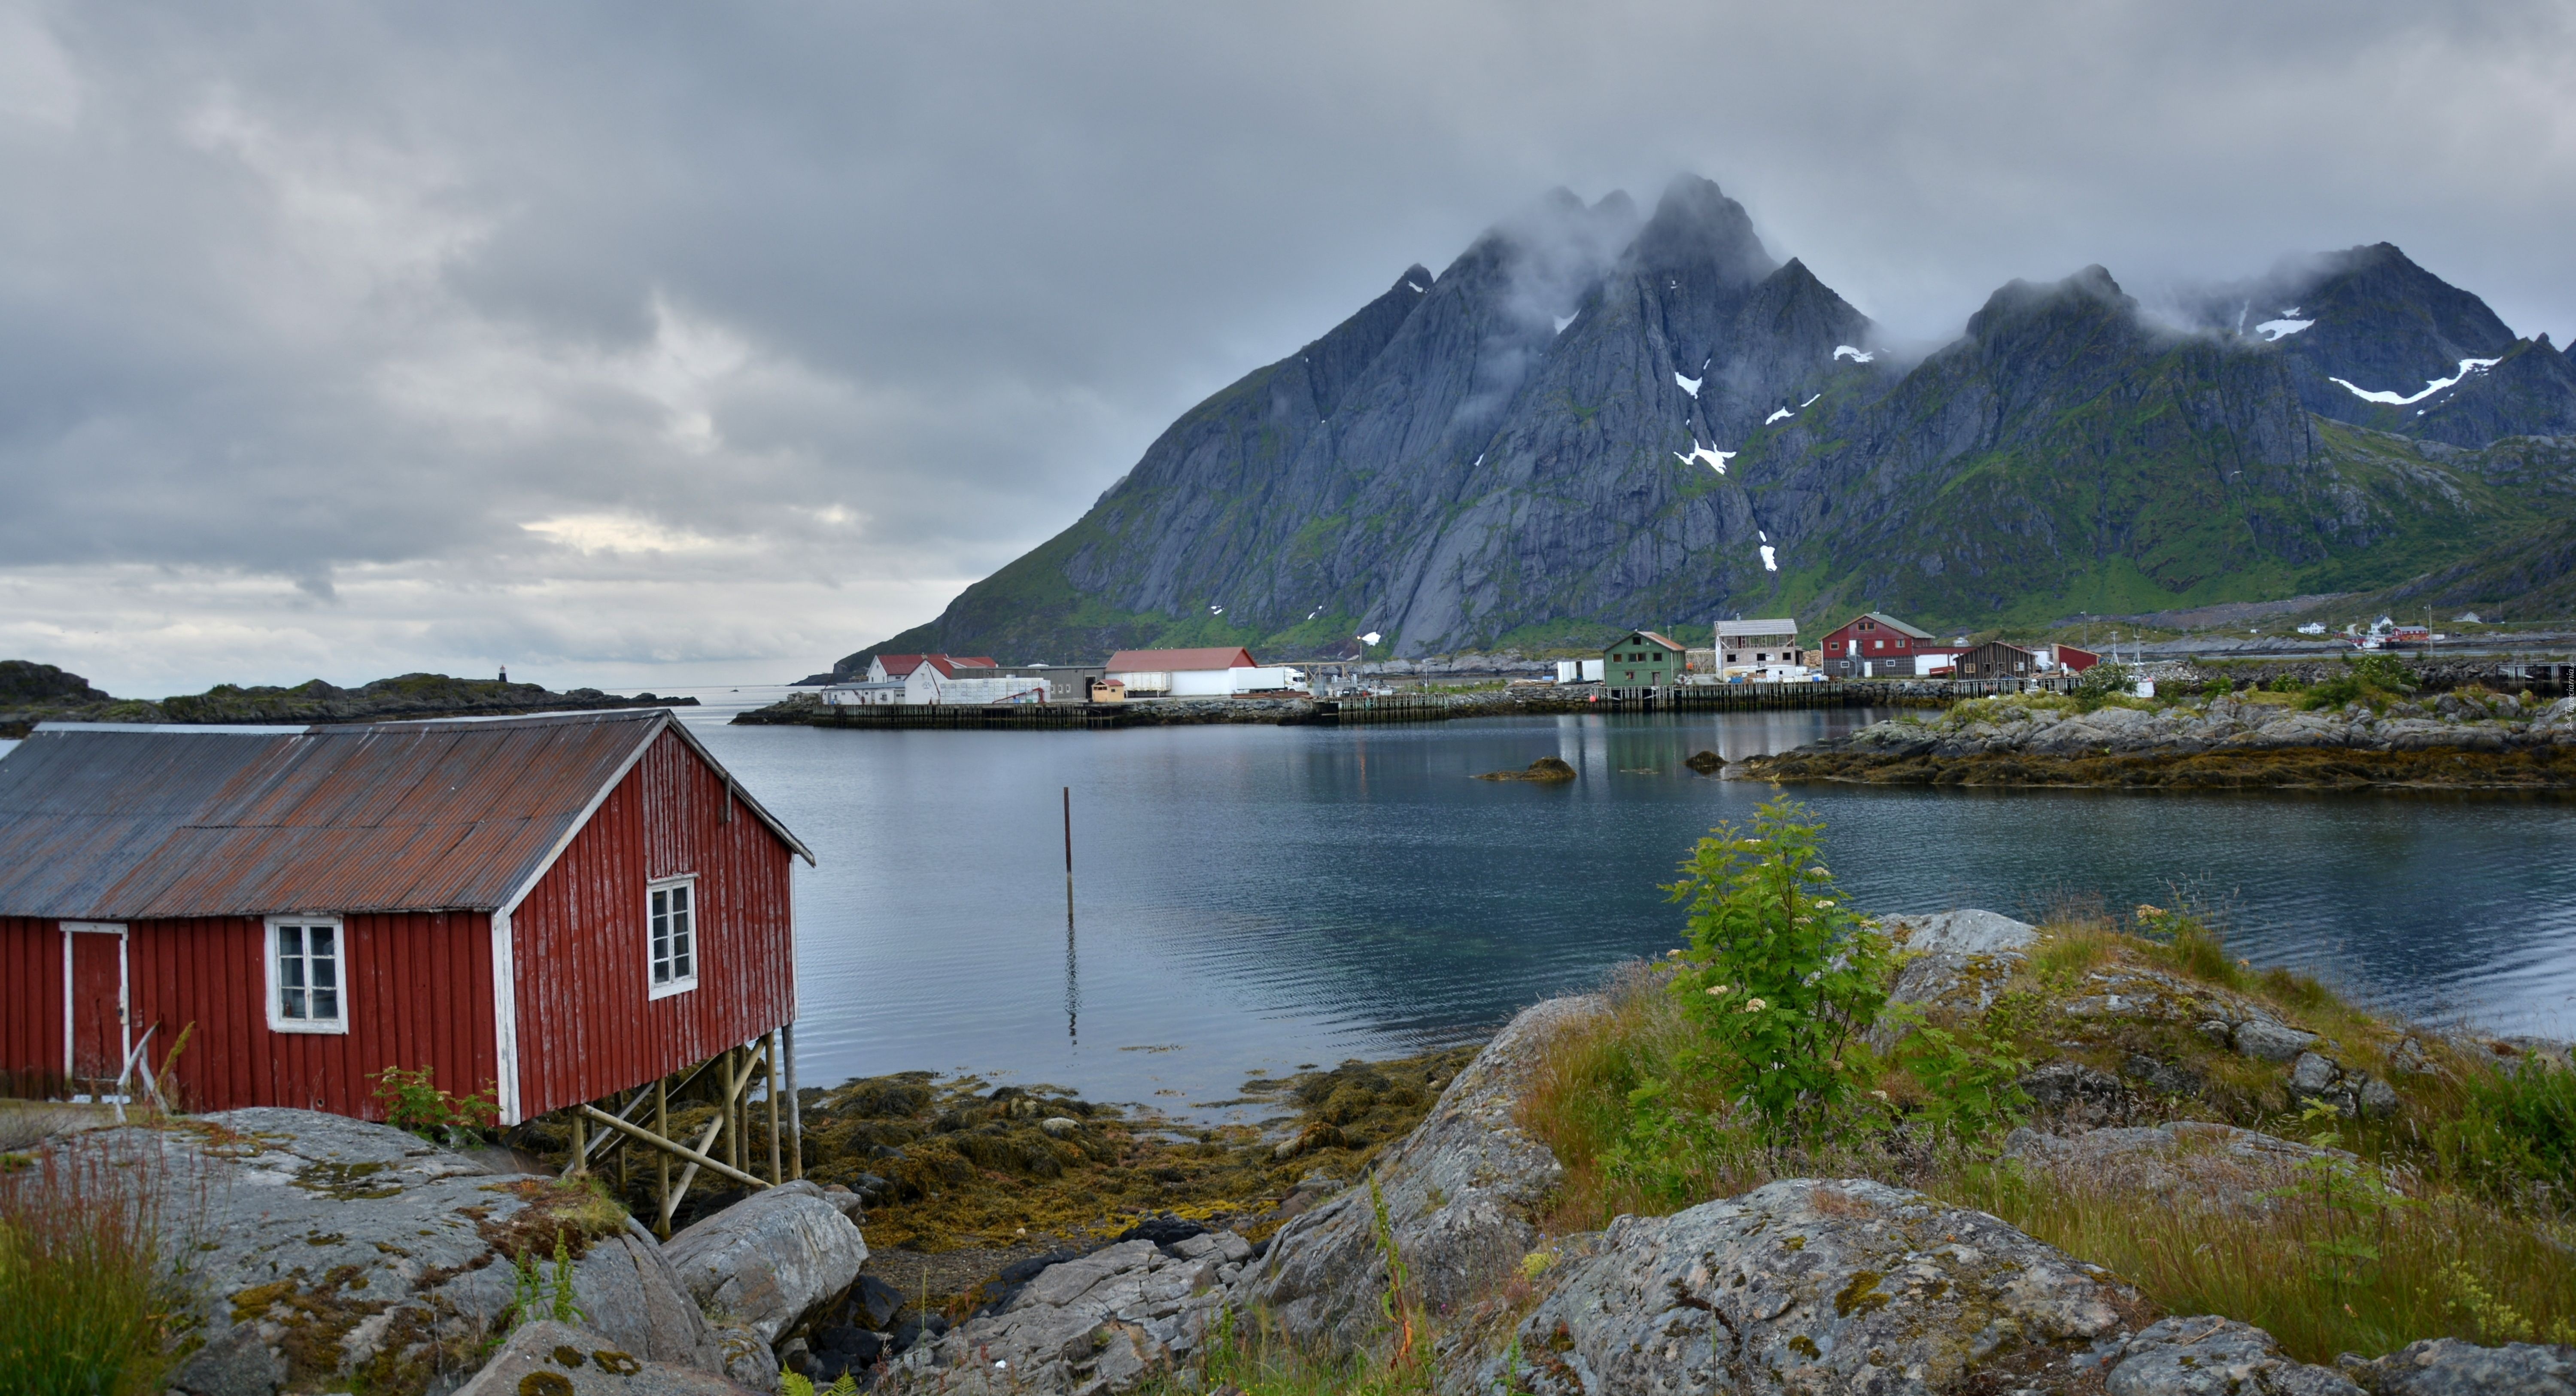 Lofoty, Góry, Morze, Norwegia